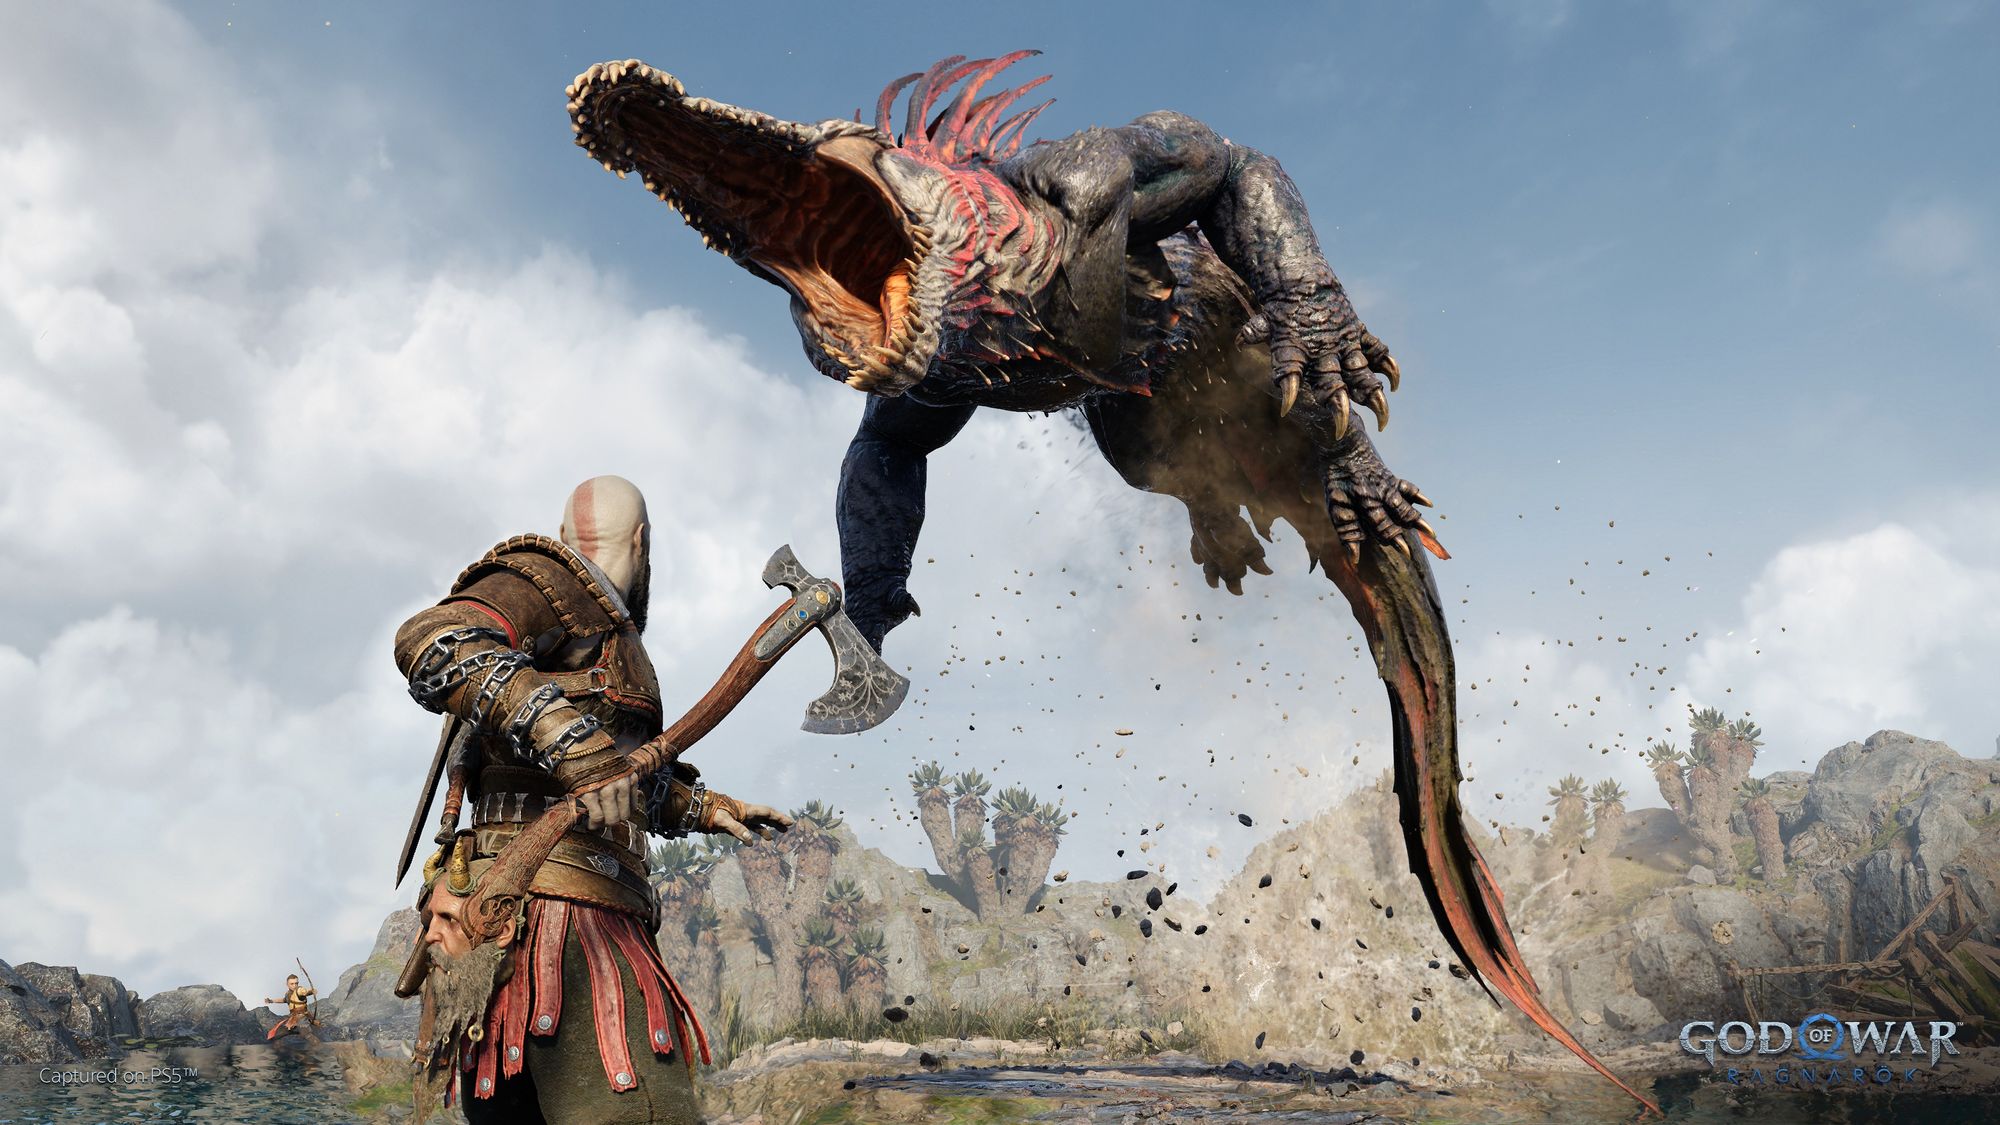 Capture shot of Kratos and Atreus fighintg a weird aligator thing